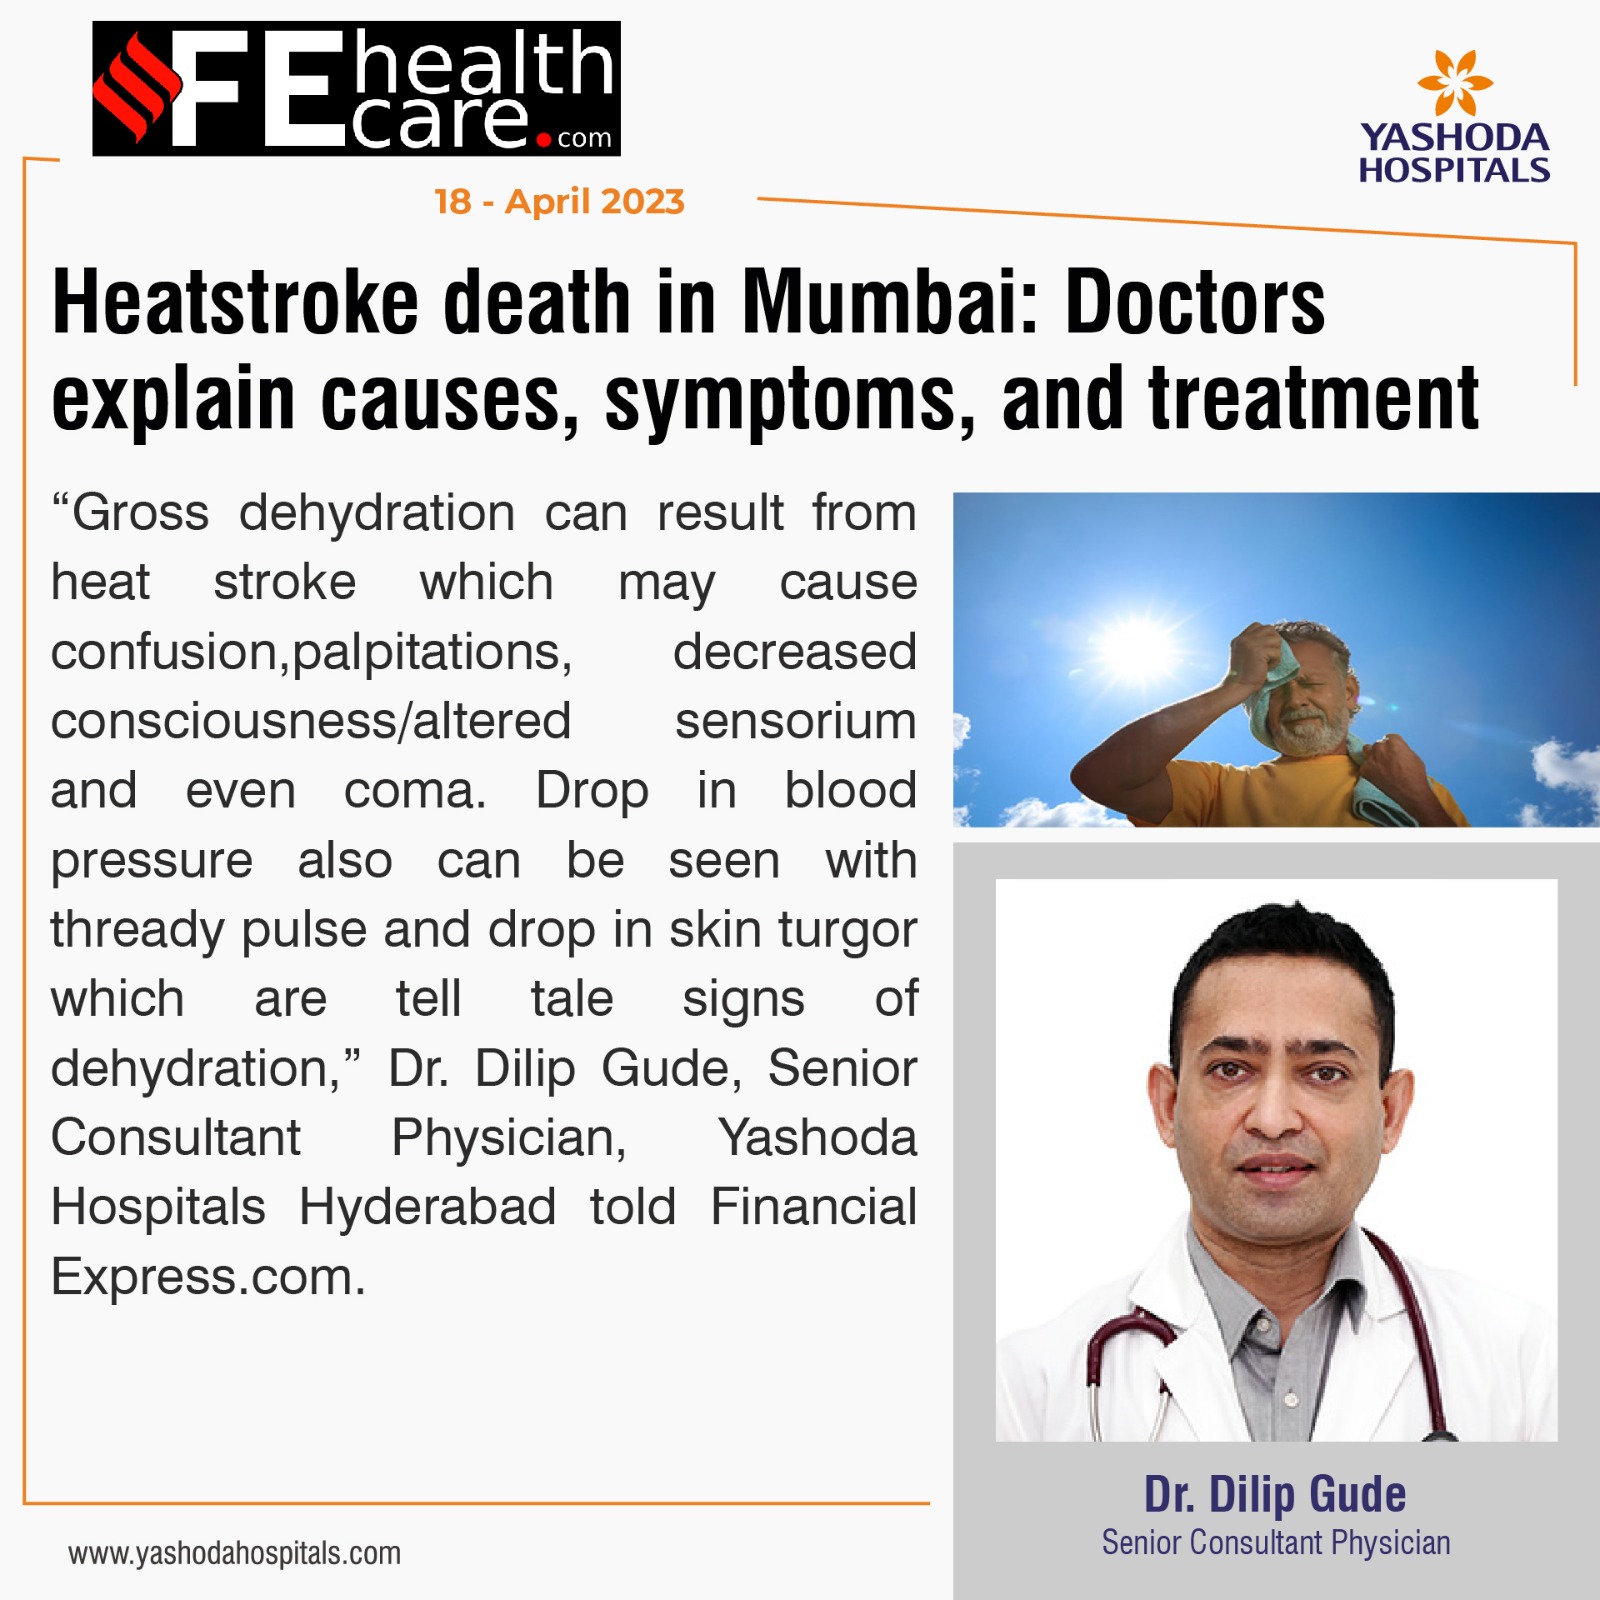 Heatstroke death in Mumbai: Doctors explain causes, symptoms, and treatment